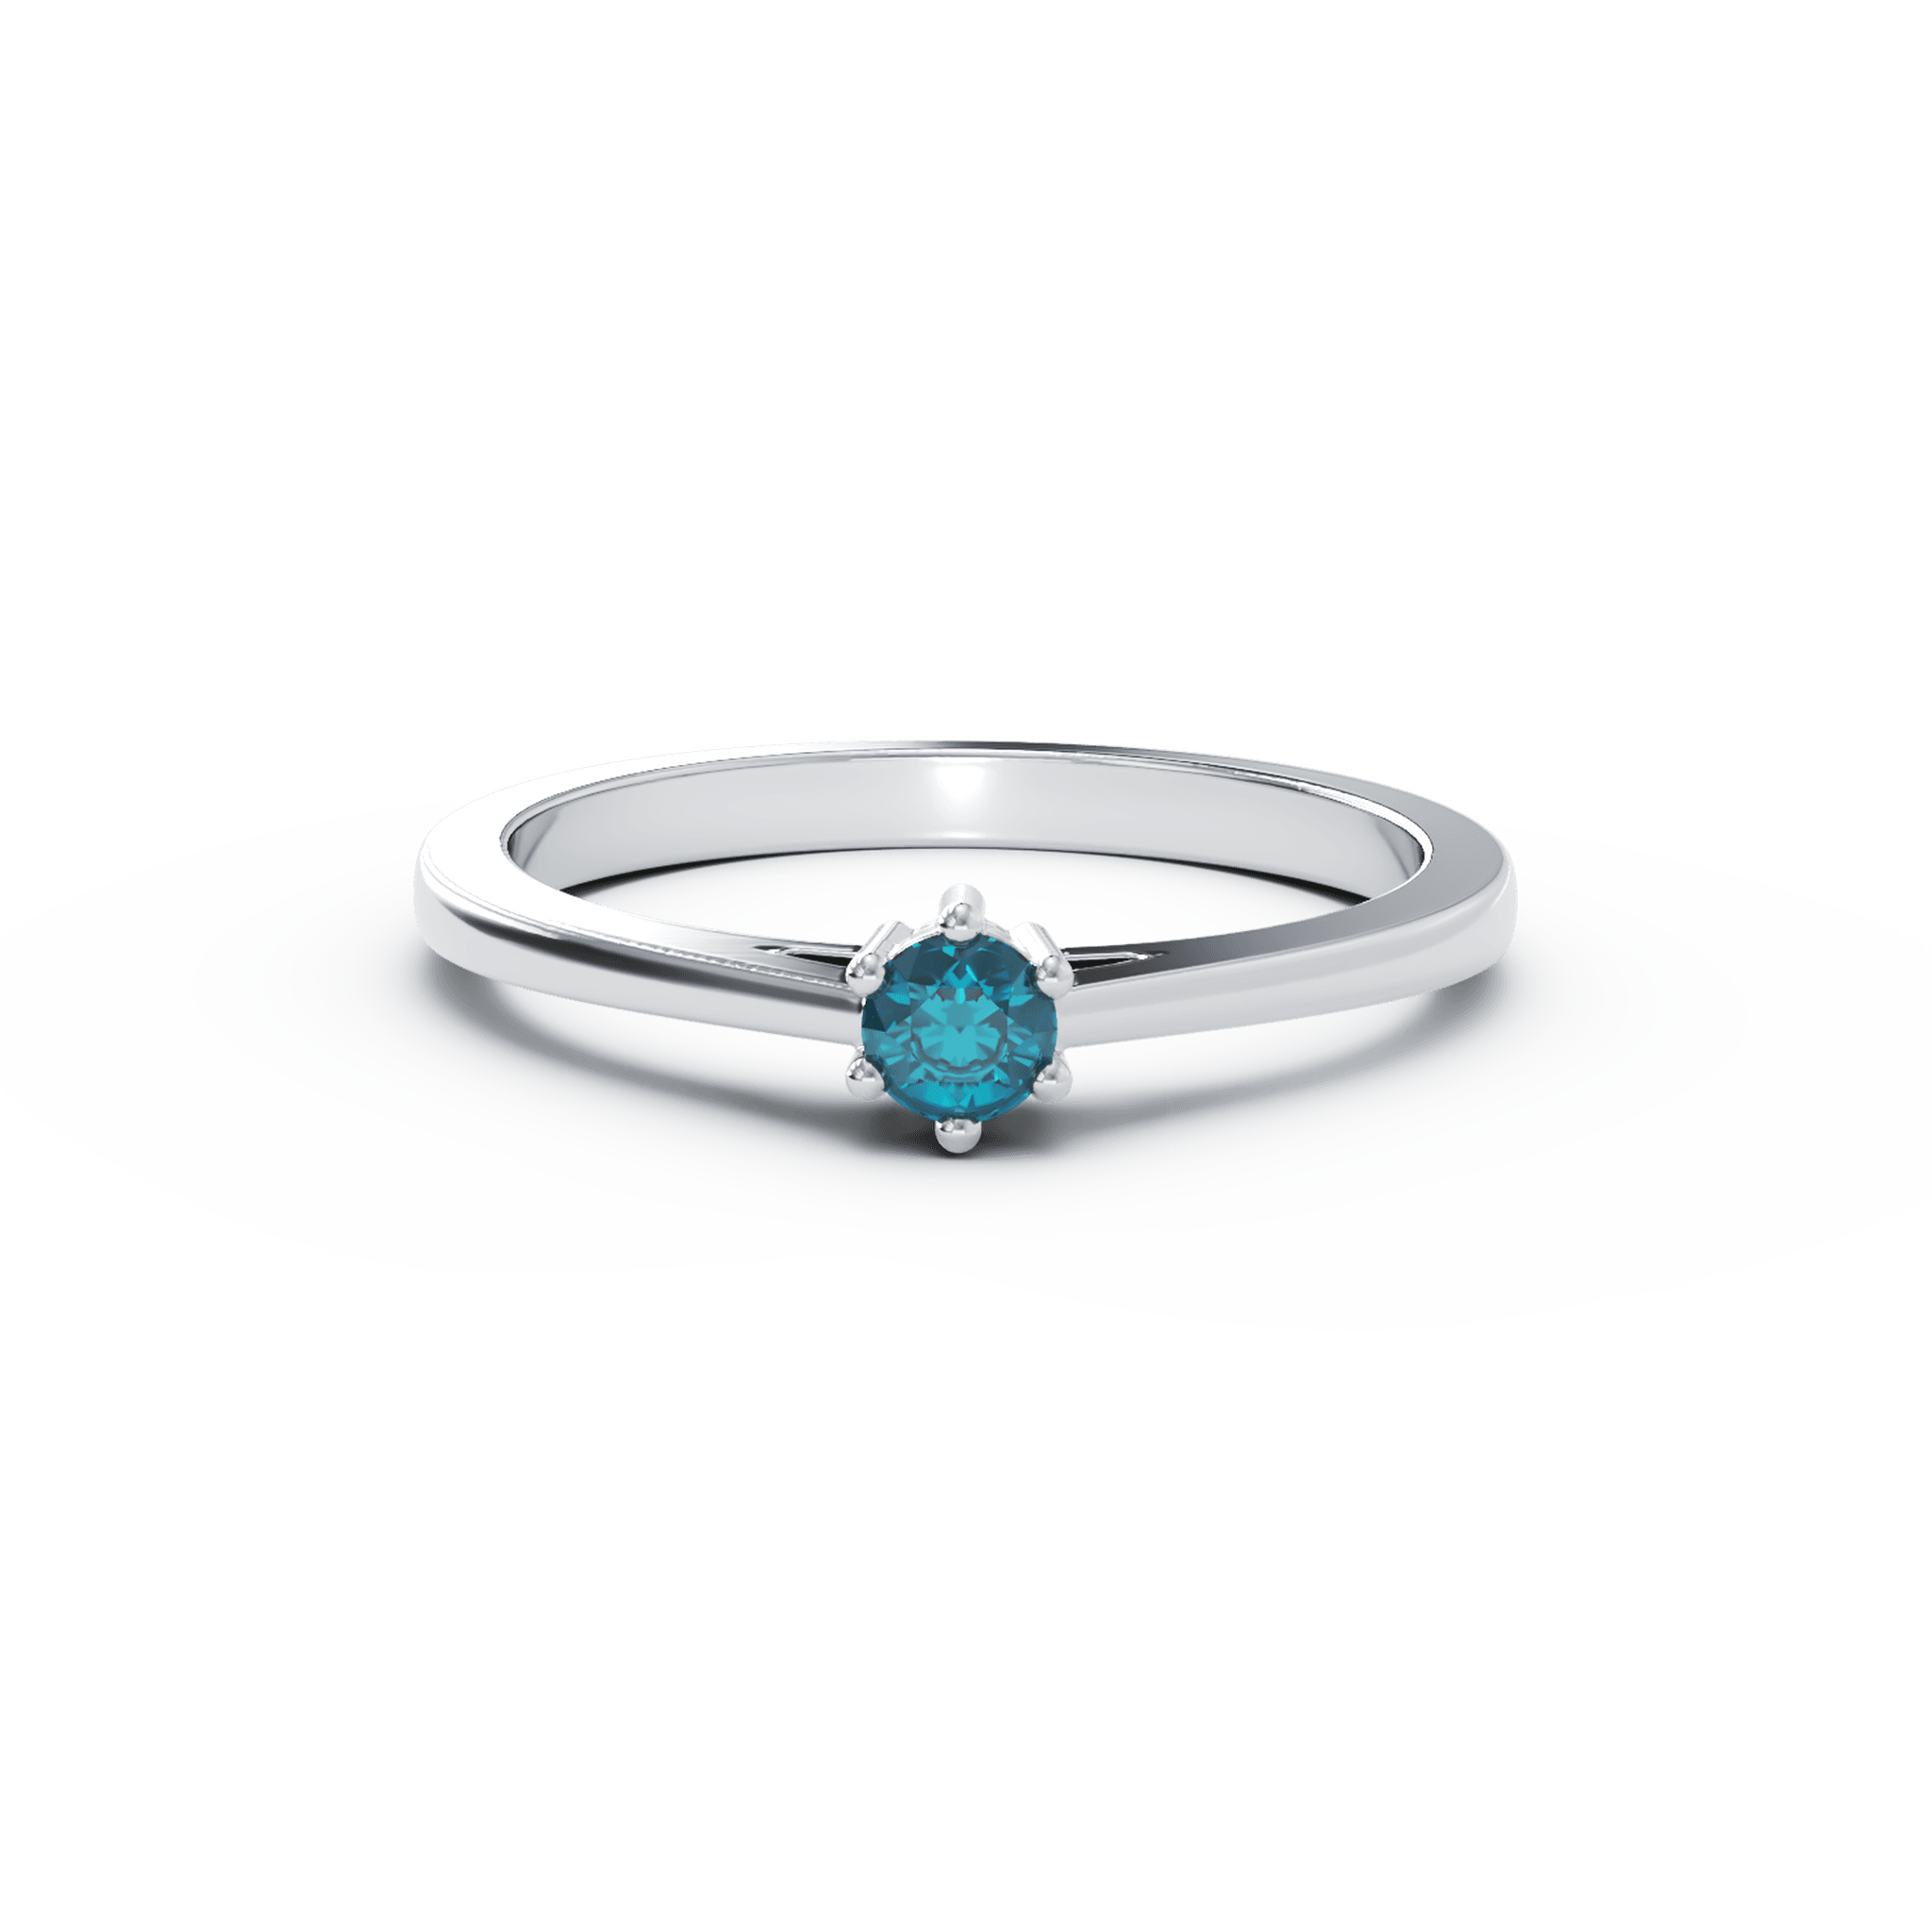 Inel de logodna din aur alb de 18K cu diamant albastru de 0.4ct